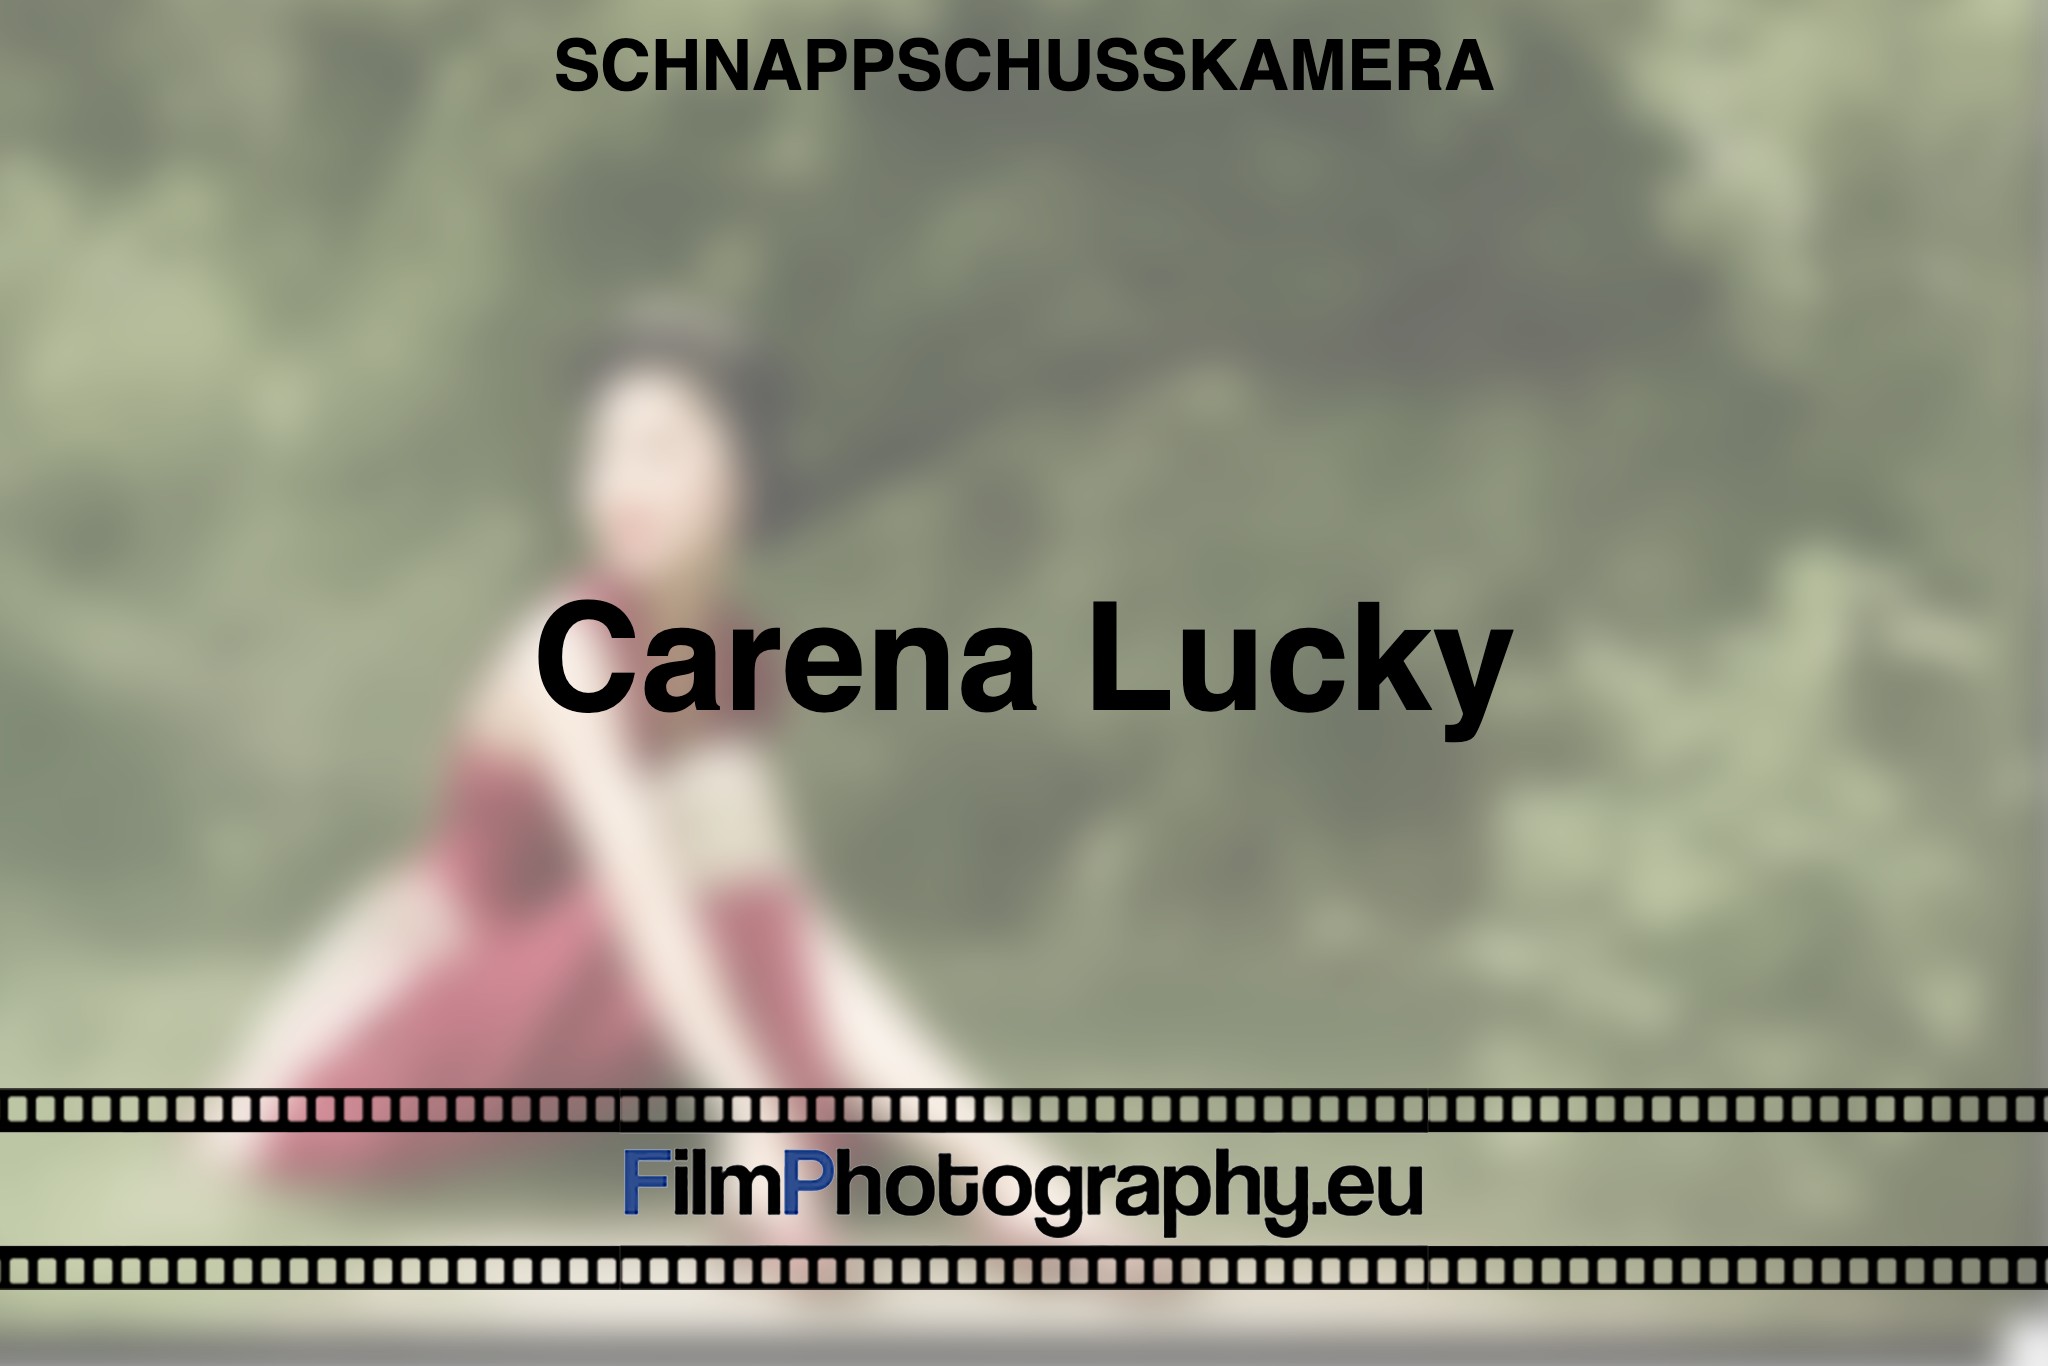 carena-lucky-schnappschusskamera-bnv